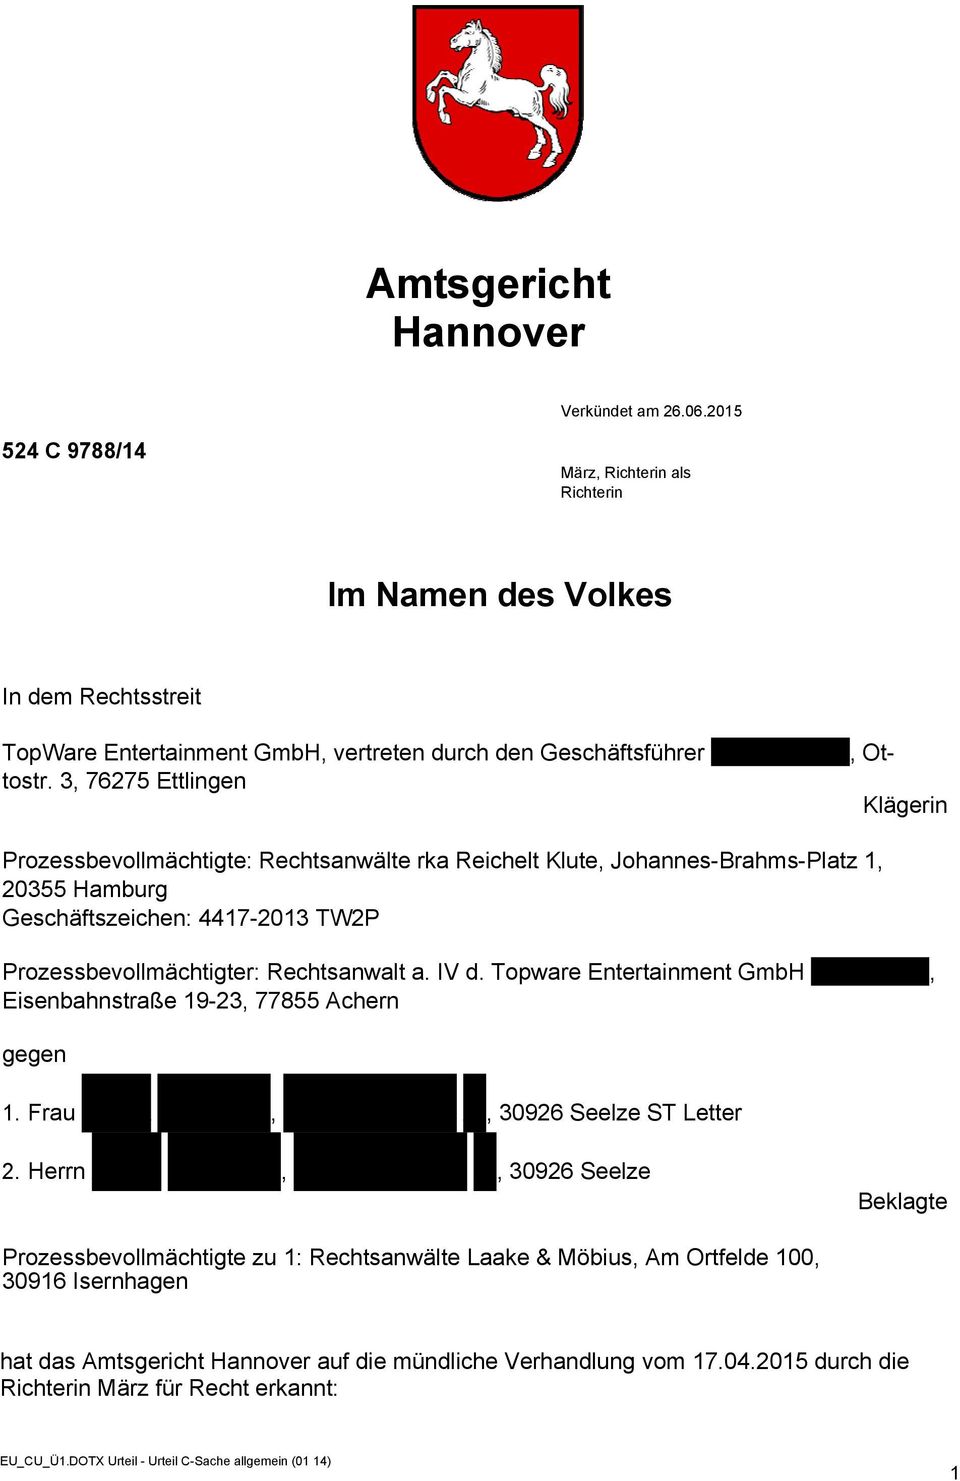 IV d. Topware Entertainment GmbH Fachanwalt, Eisenbahnstraße 19-23, 77855 Achern gegen 1. Frau Anwalt Filesharing, Rechtsanwalt-IT. xx, 30926 Seelze ST Letter 2.